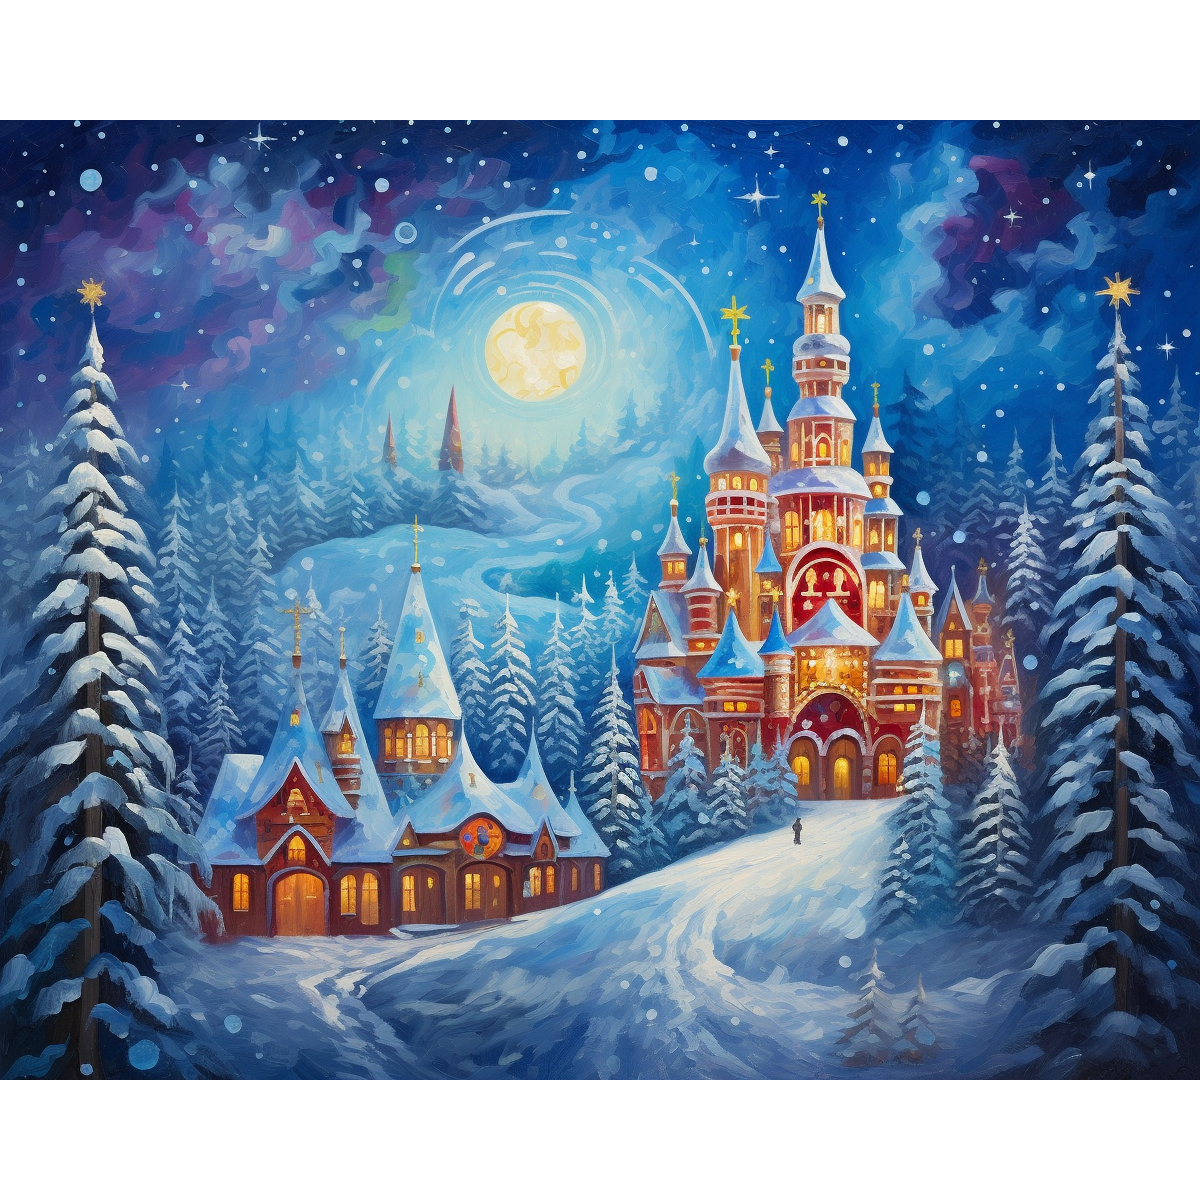 Snowy Christmas Palace